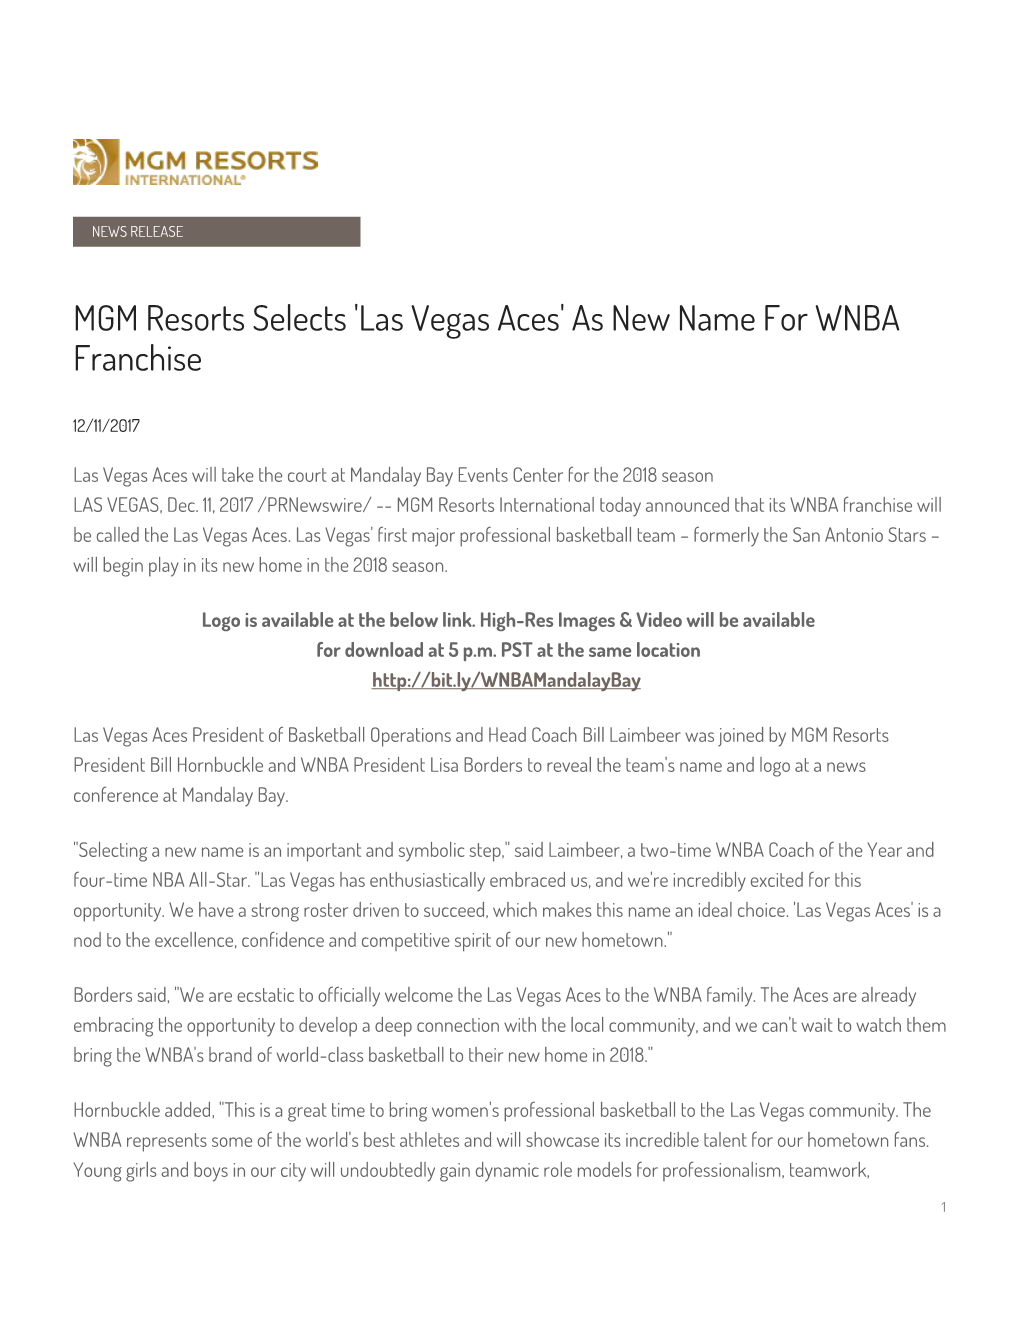 Las Vegas Aces' As New Name for WNBA Franchise